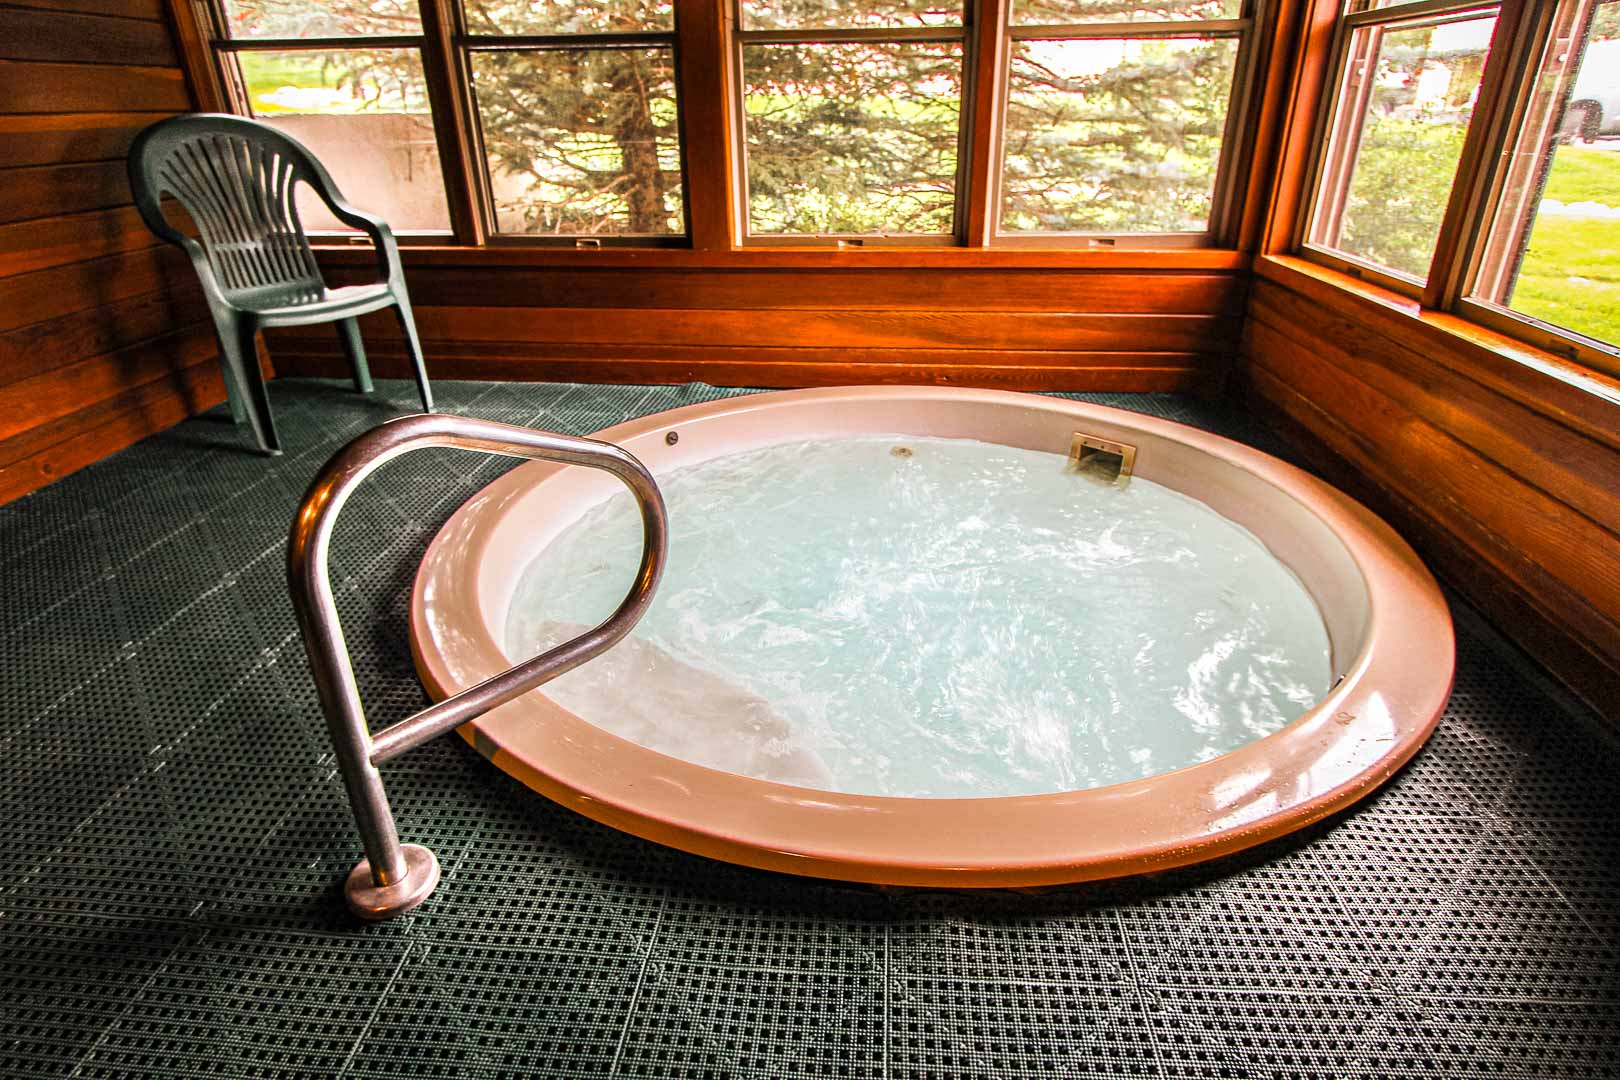 A cozy indoor Jacuzzi tub at VRI's Sunburst Resort in Steamboat Springs, Colorado.